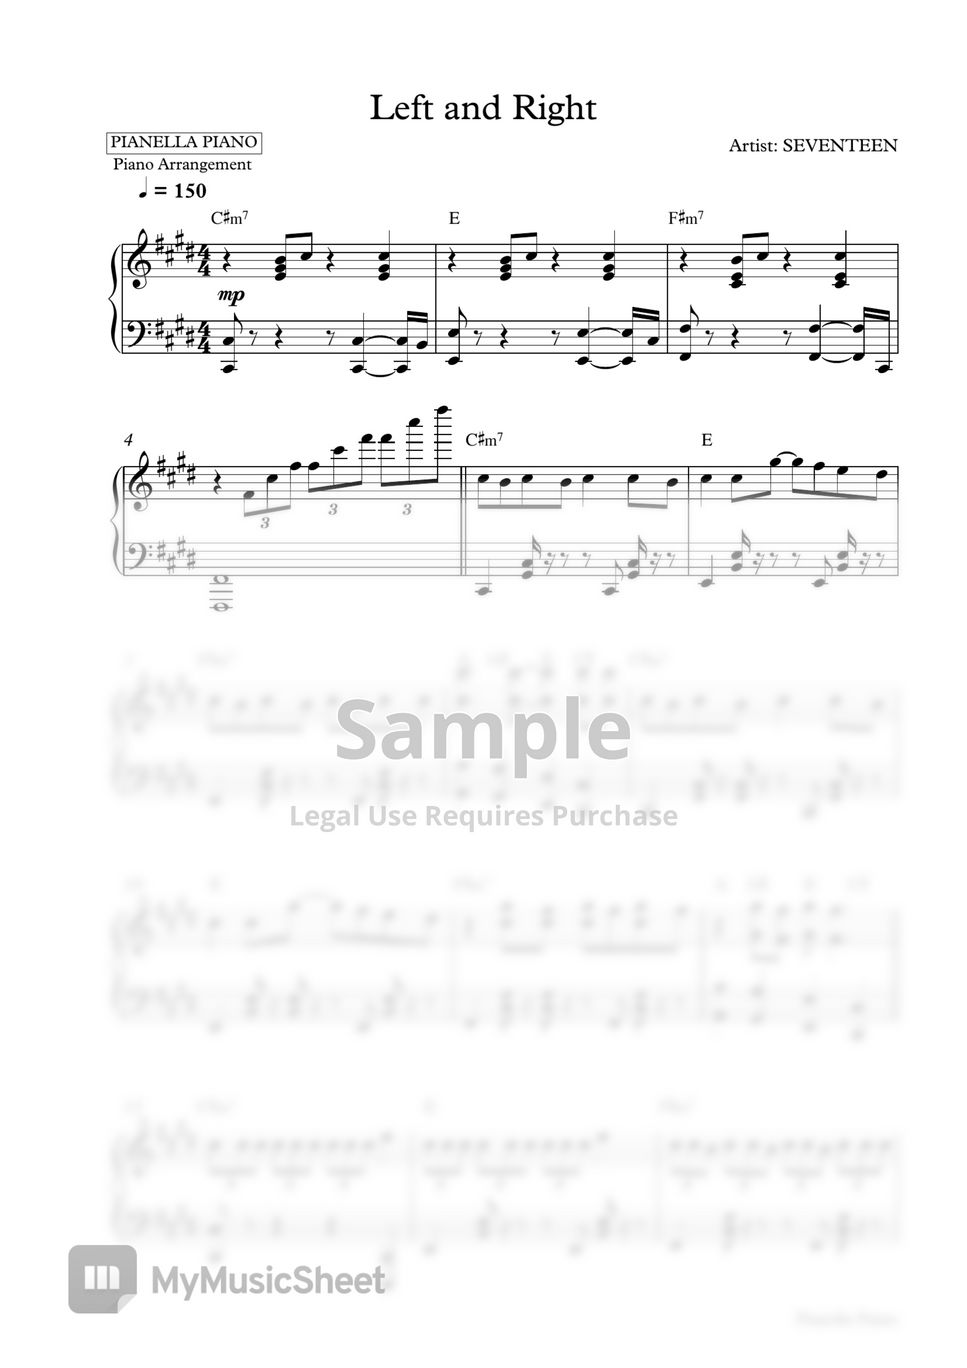 SEVENTEEN - Left & Right (Piano Sheet) by Pianella Piano